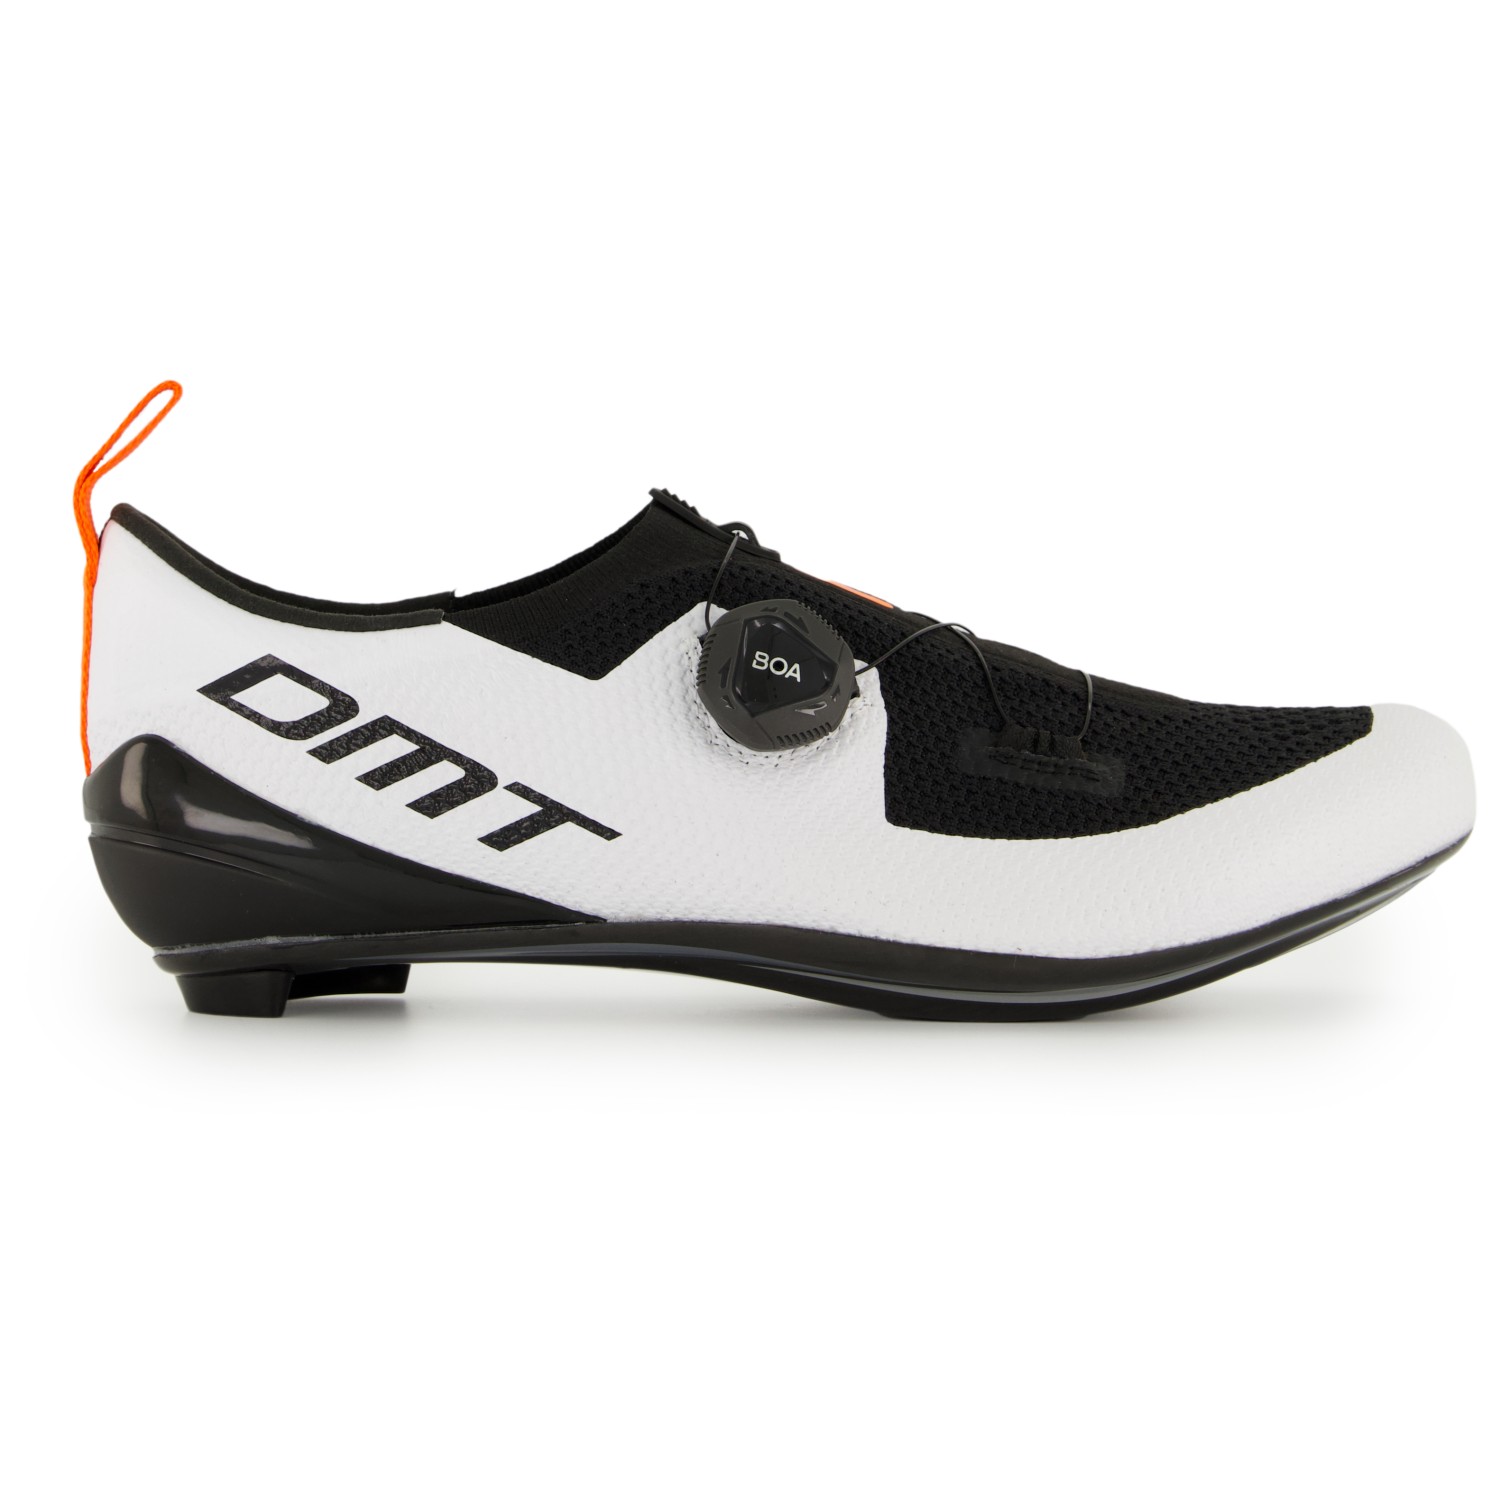 Велосипедная обувь Dmt KT1, цвет White/Black